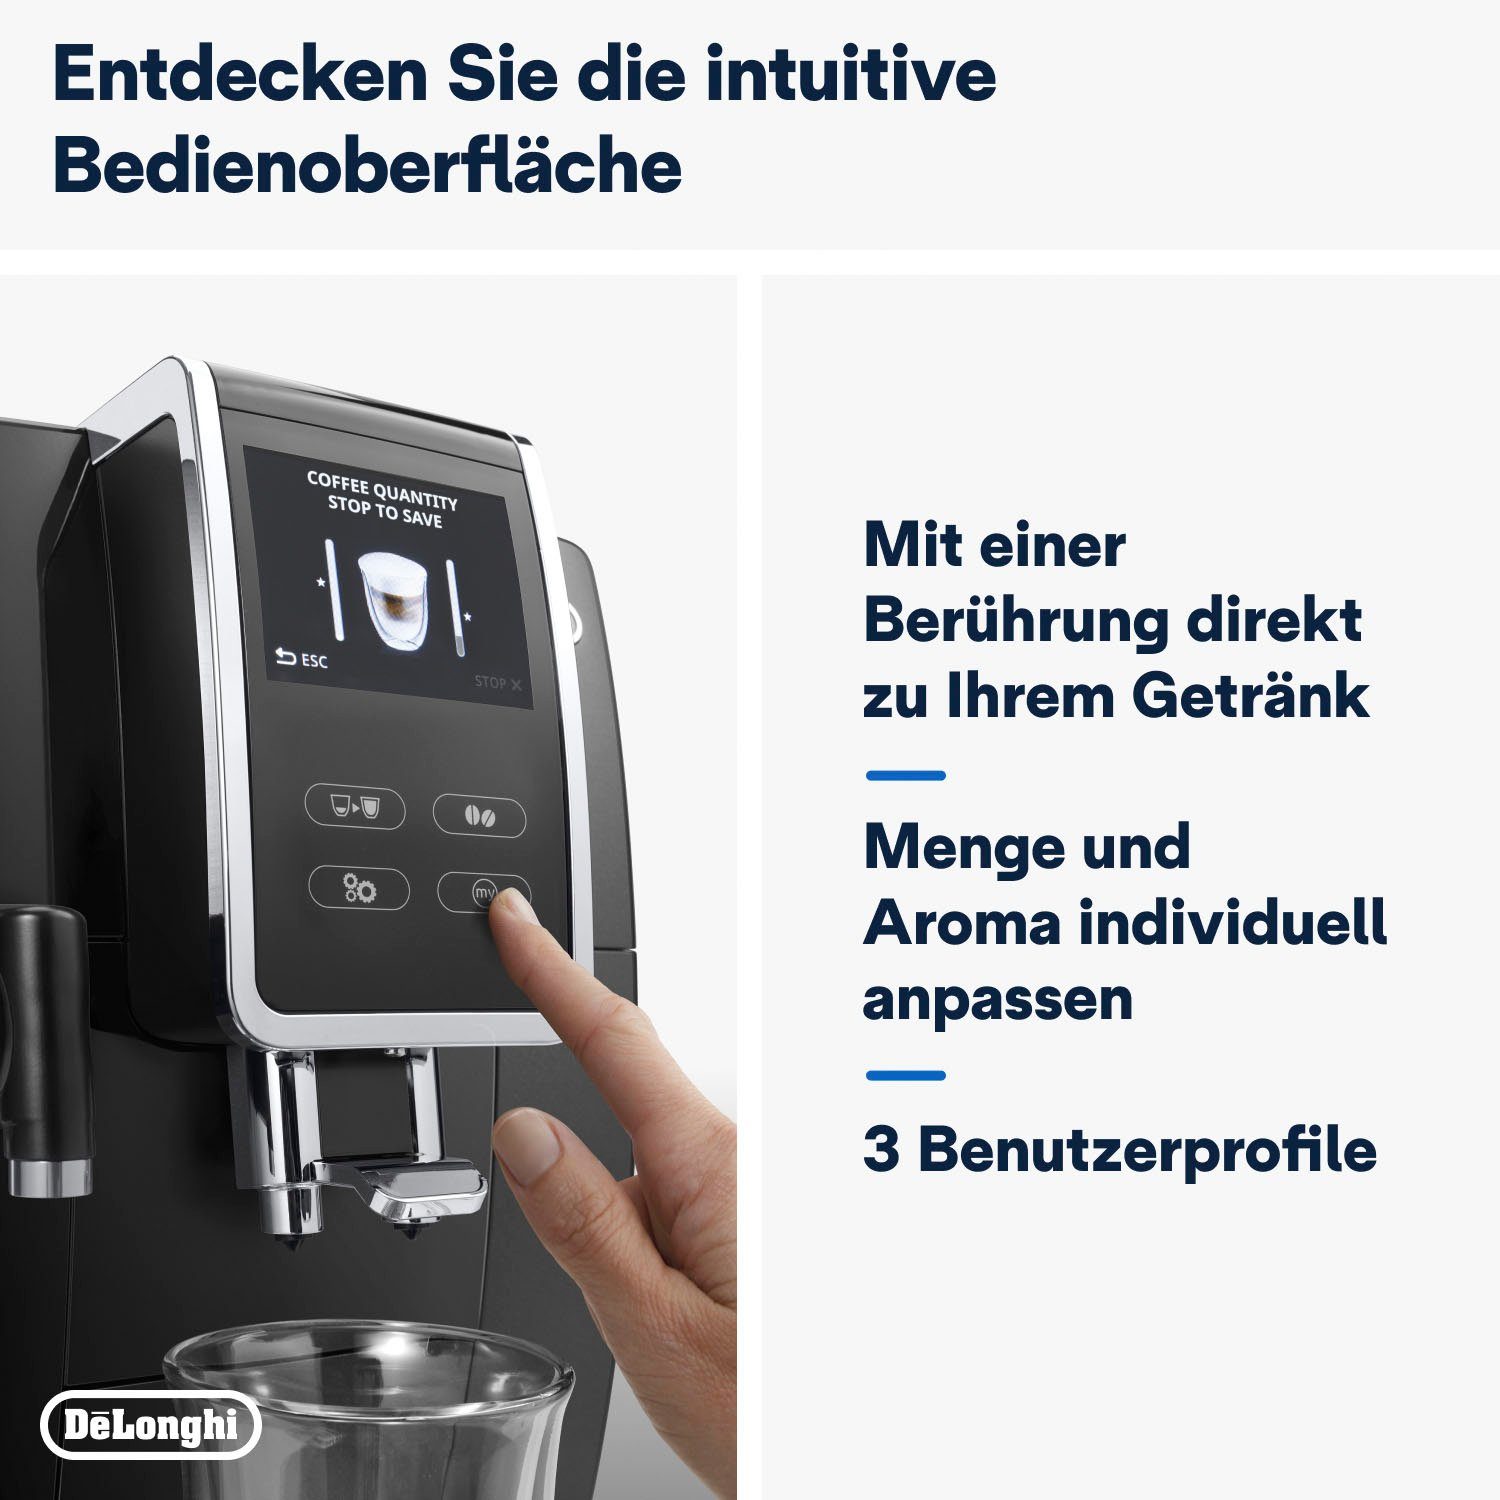 Kaffeevollautomat Dinamica Plus und LatteCrema mit Milchsystem Kaffeekannenfunktion ECAM 370.70.B, De'Longhi